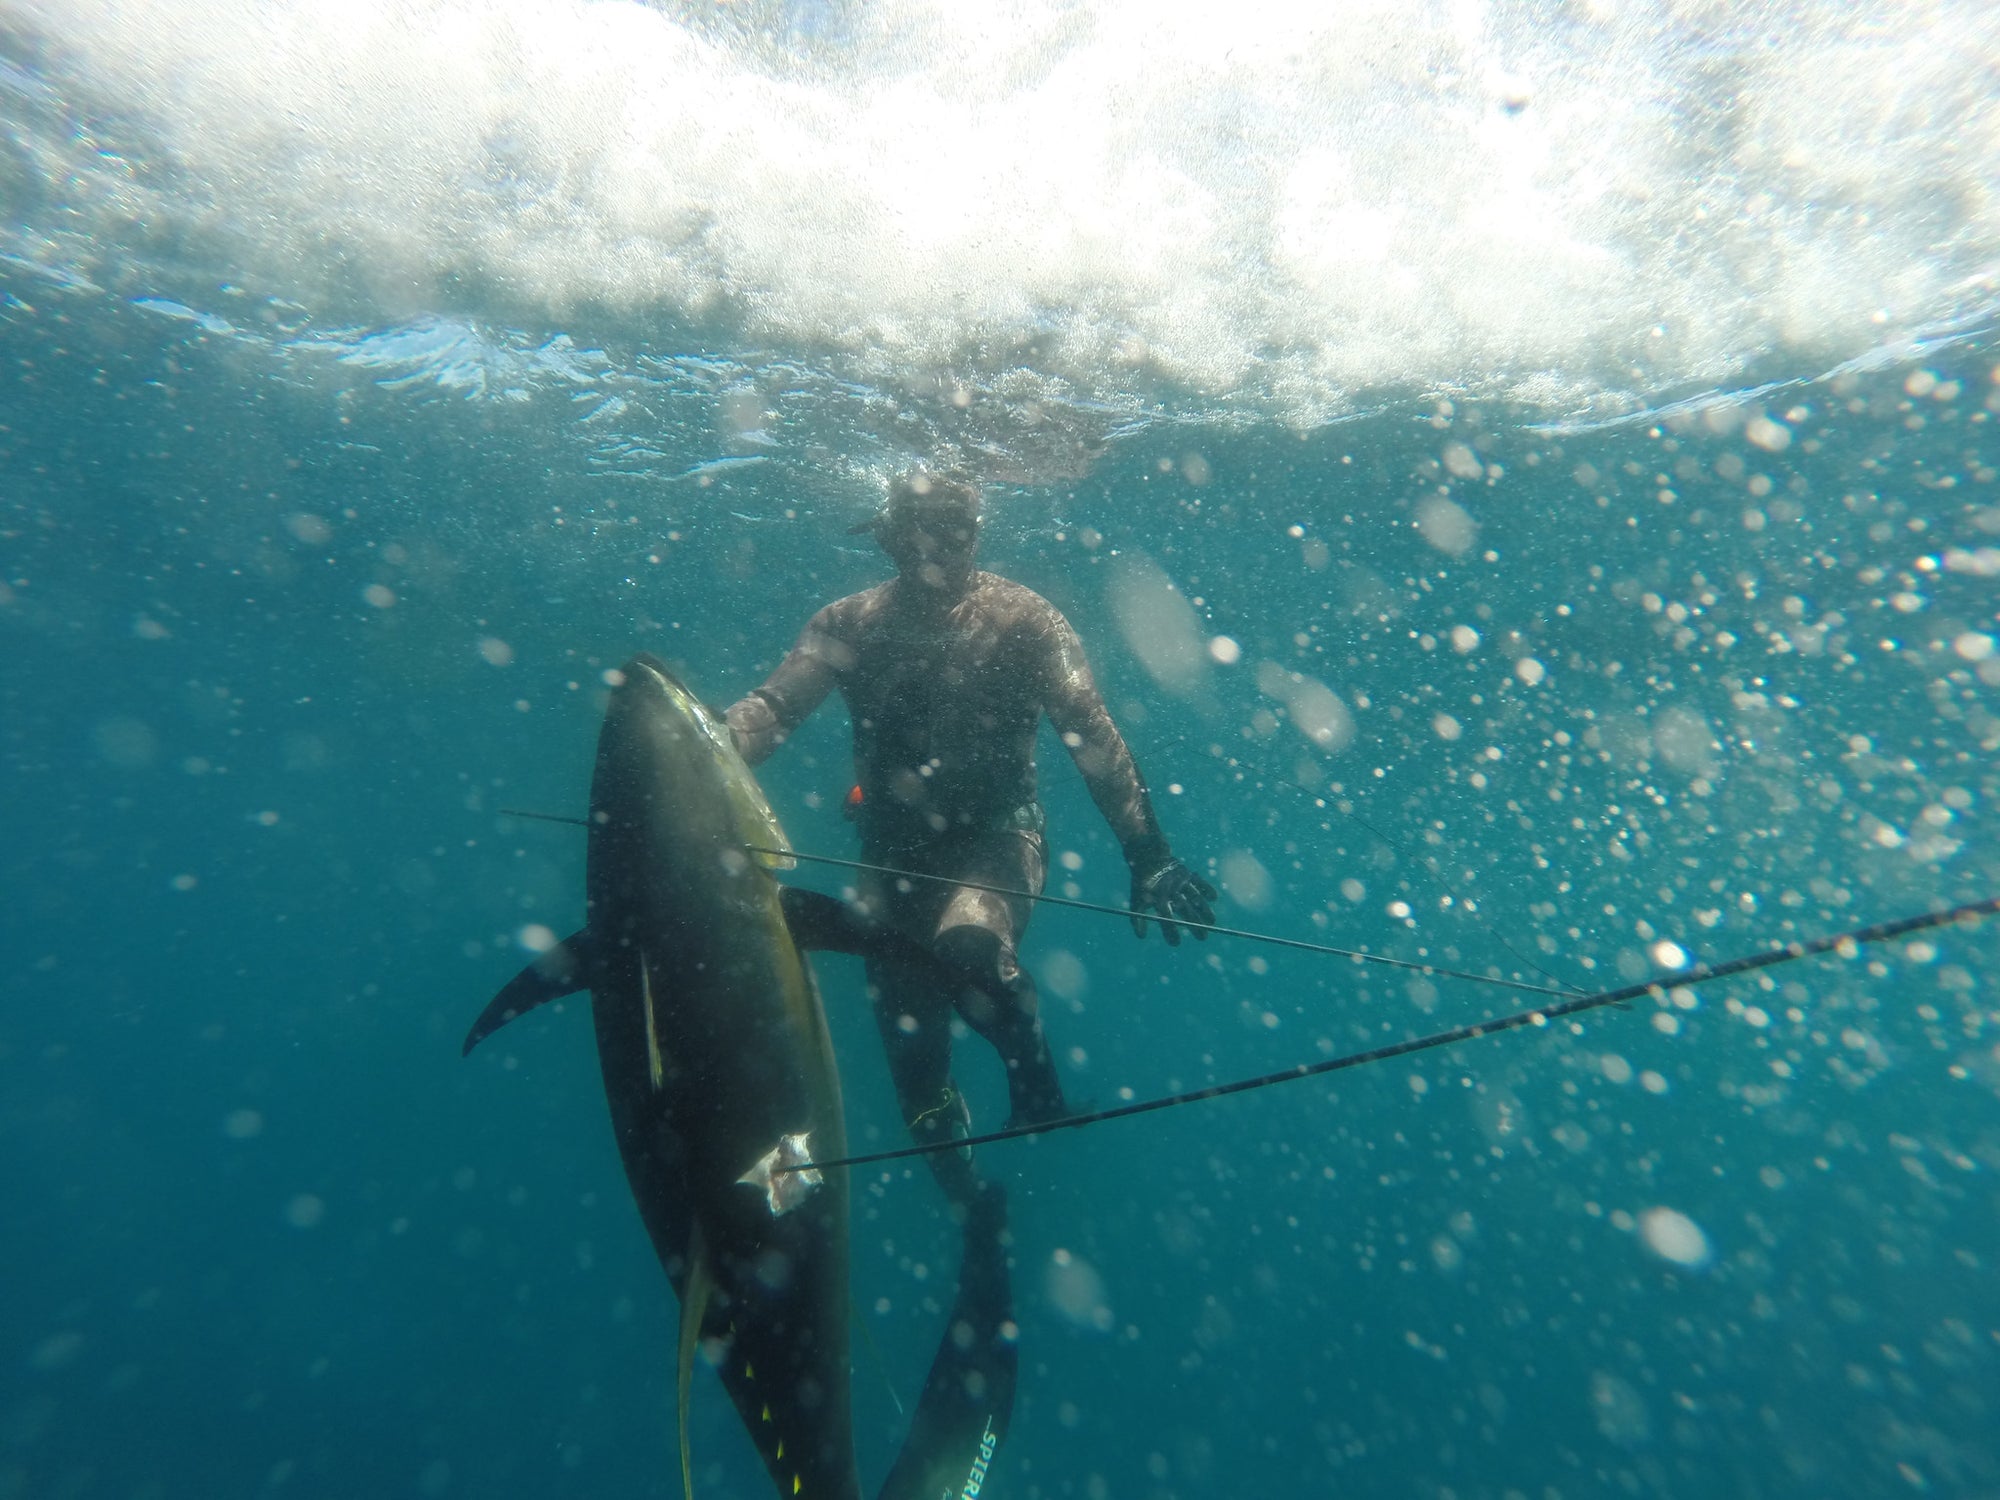 Jacques Theron Yellowfin Tuna Big Wave Surfer